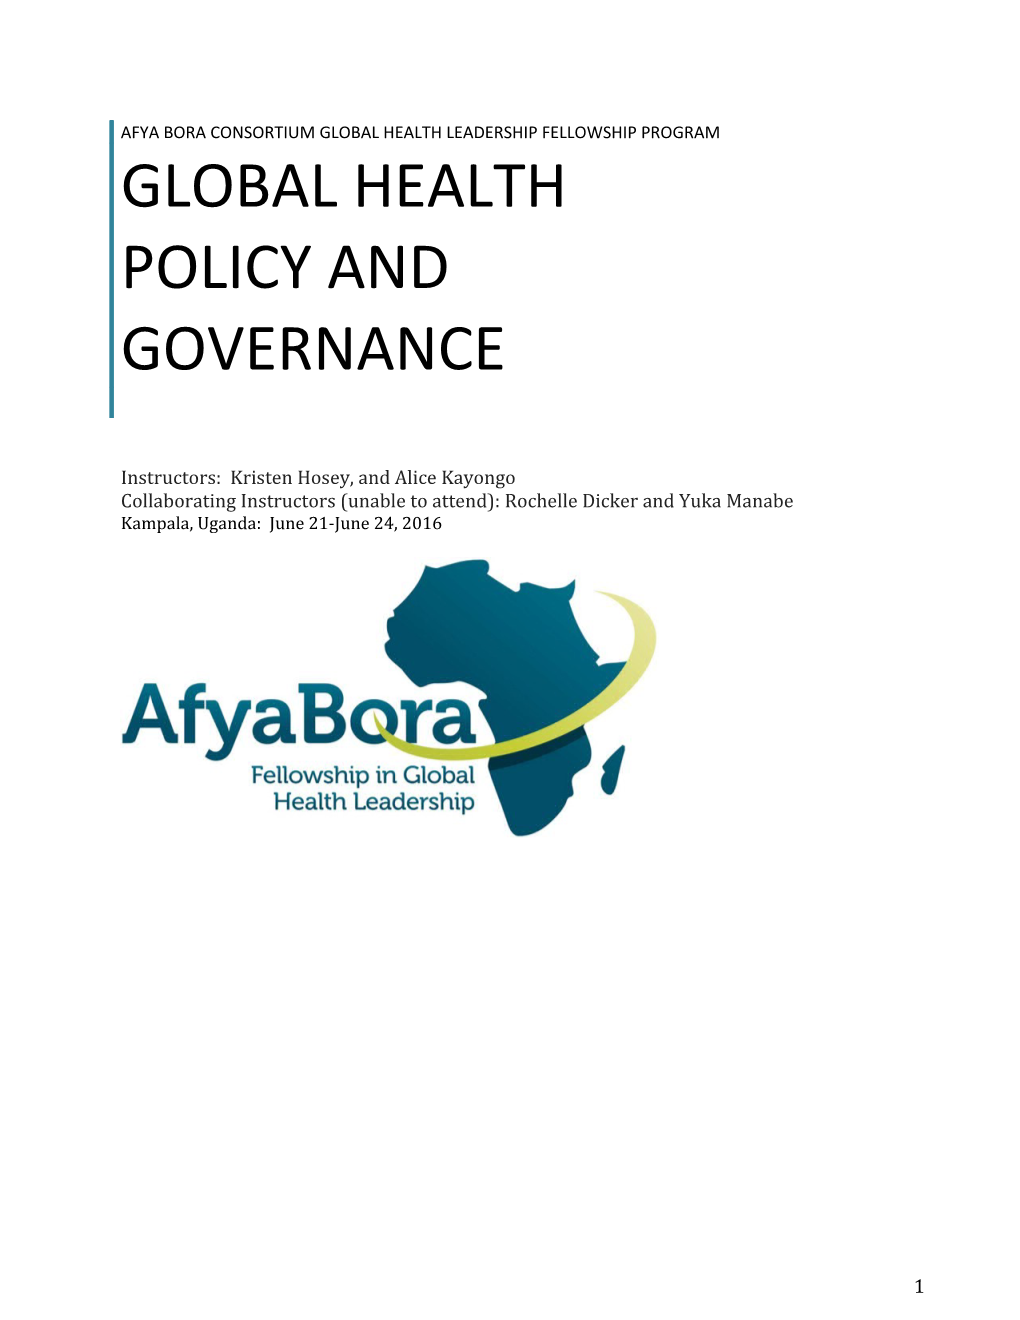 Global Health Policy and Governance